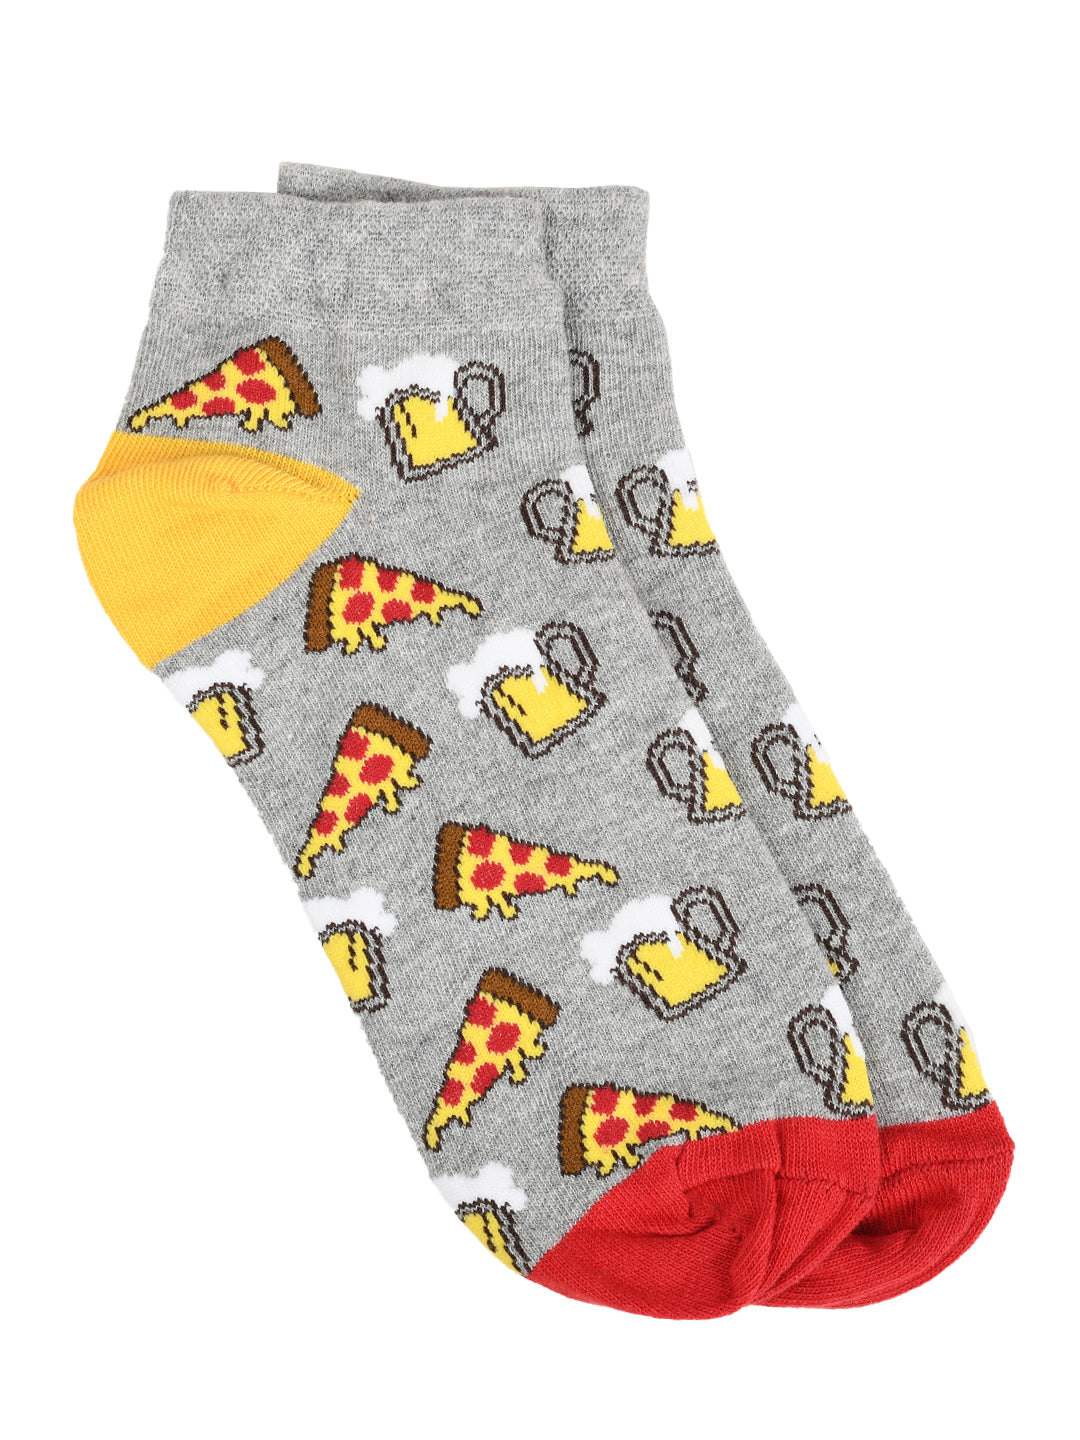 SWHF Organic Cotton Unisex Designer Socks Set (Ankle Length, Pizza)